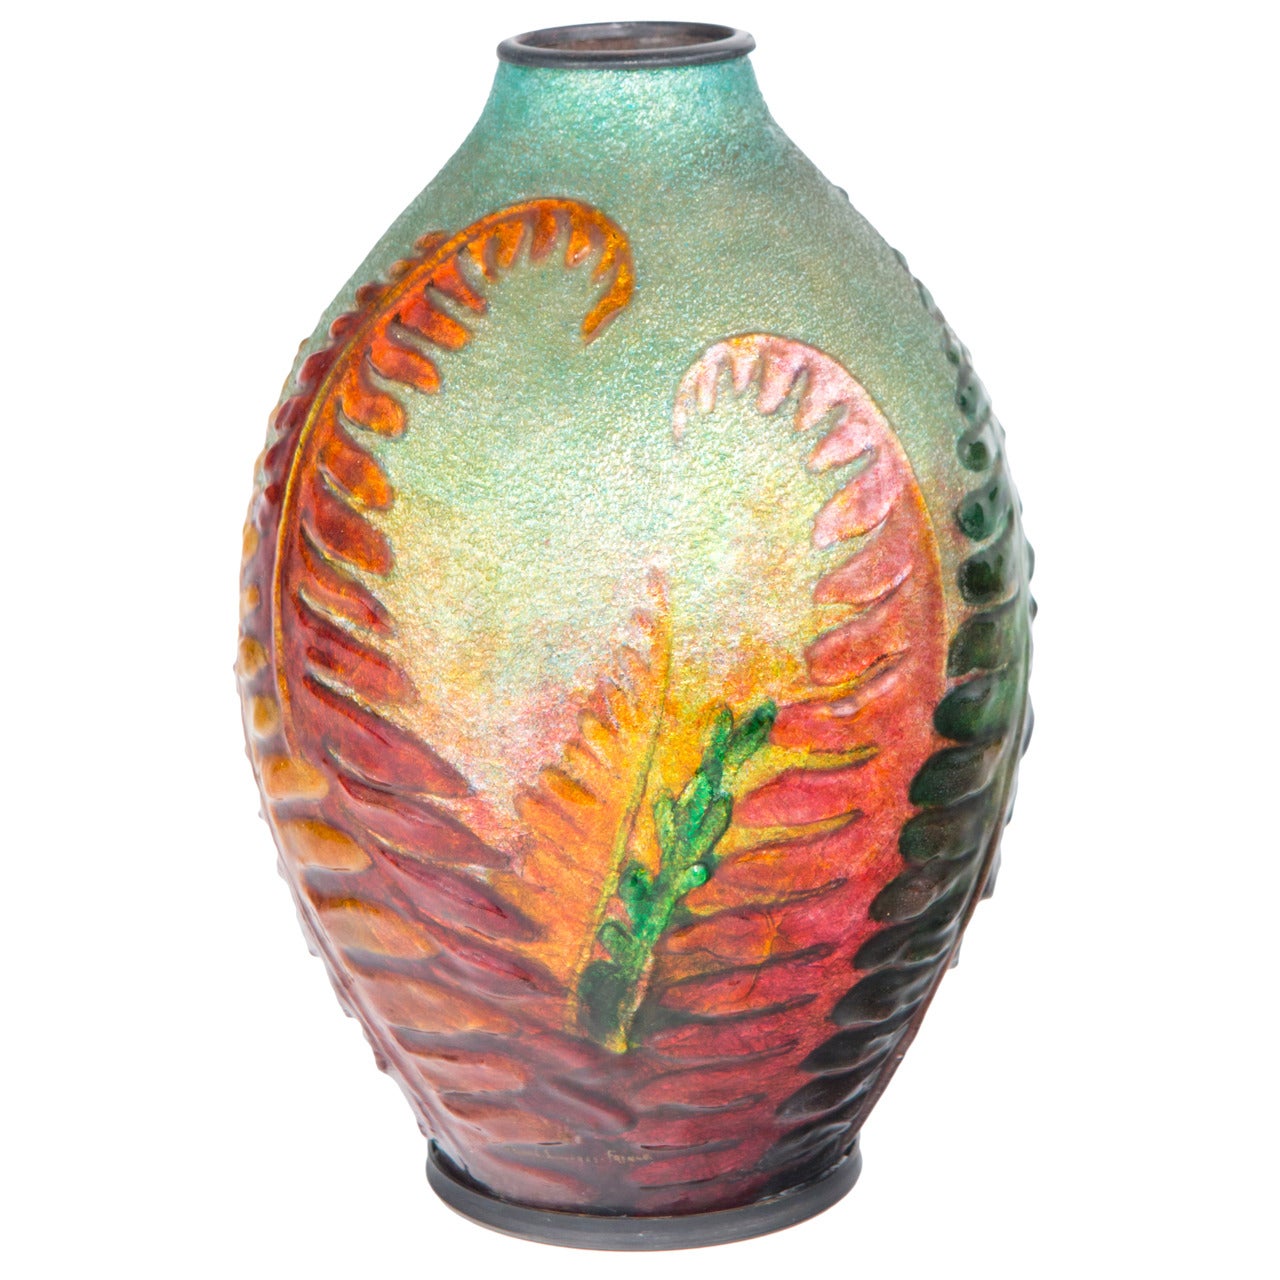 French Art Nouveau Enameled Glass "Fern" Vase by Camille Fauré